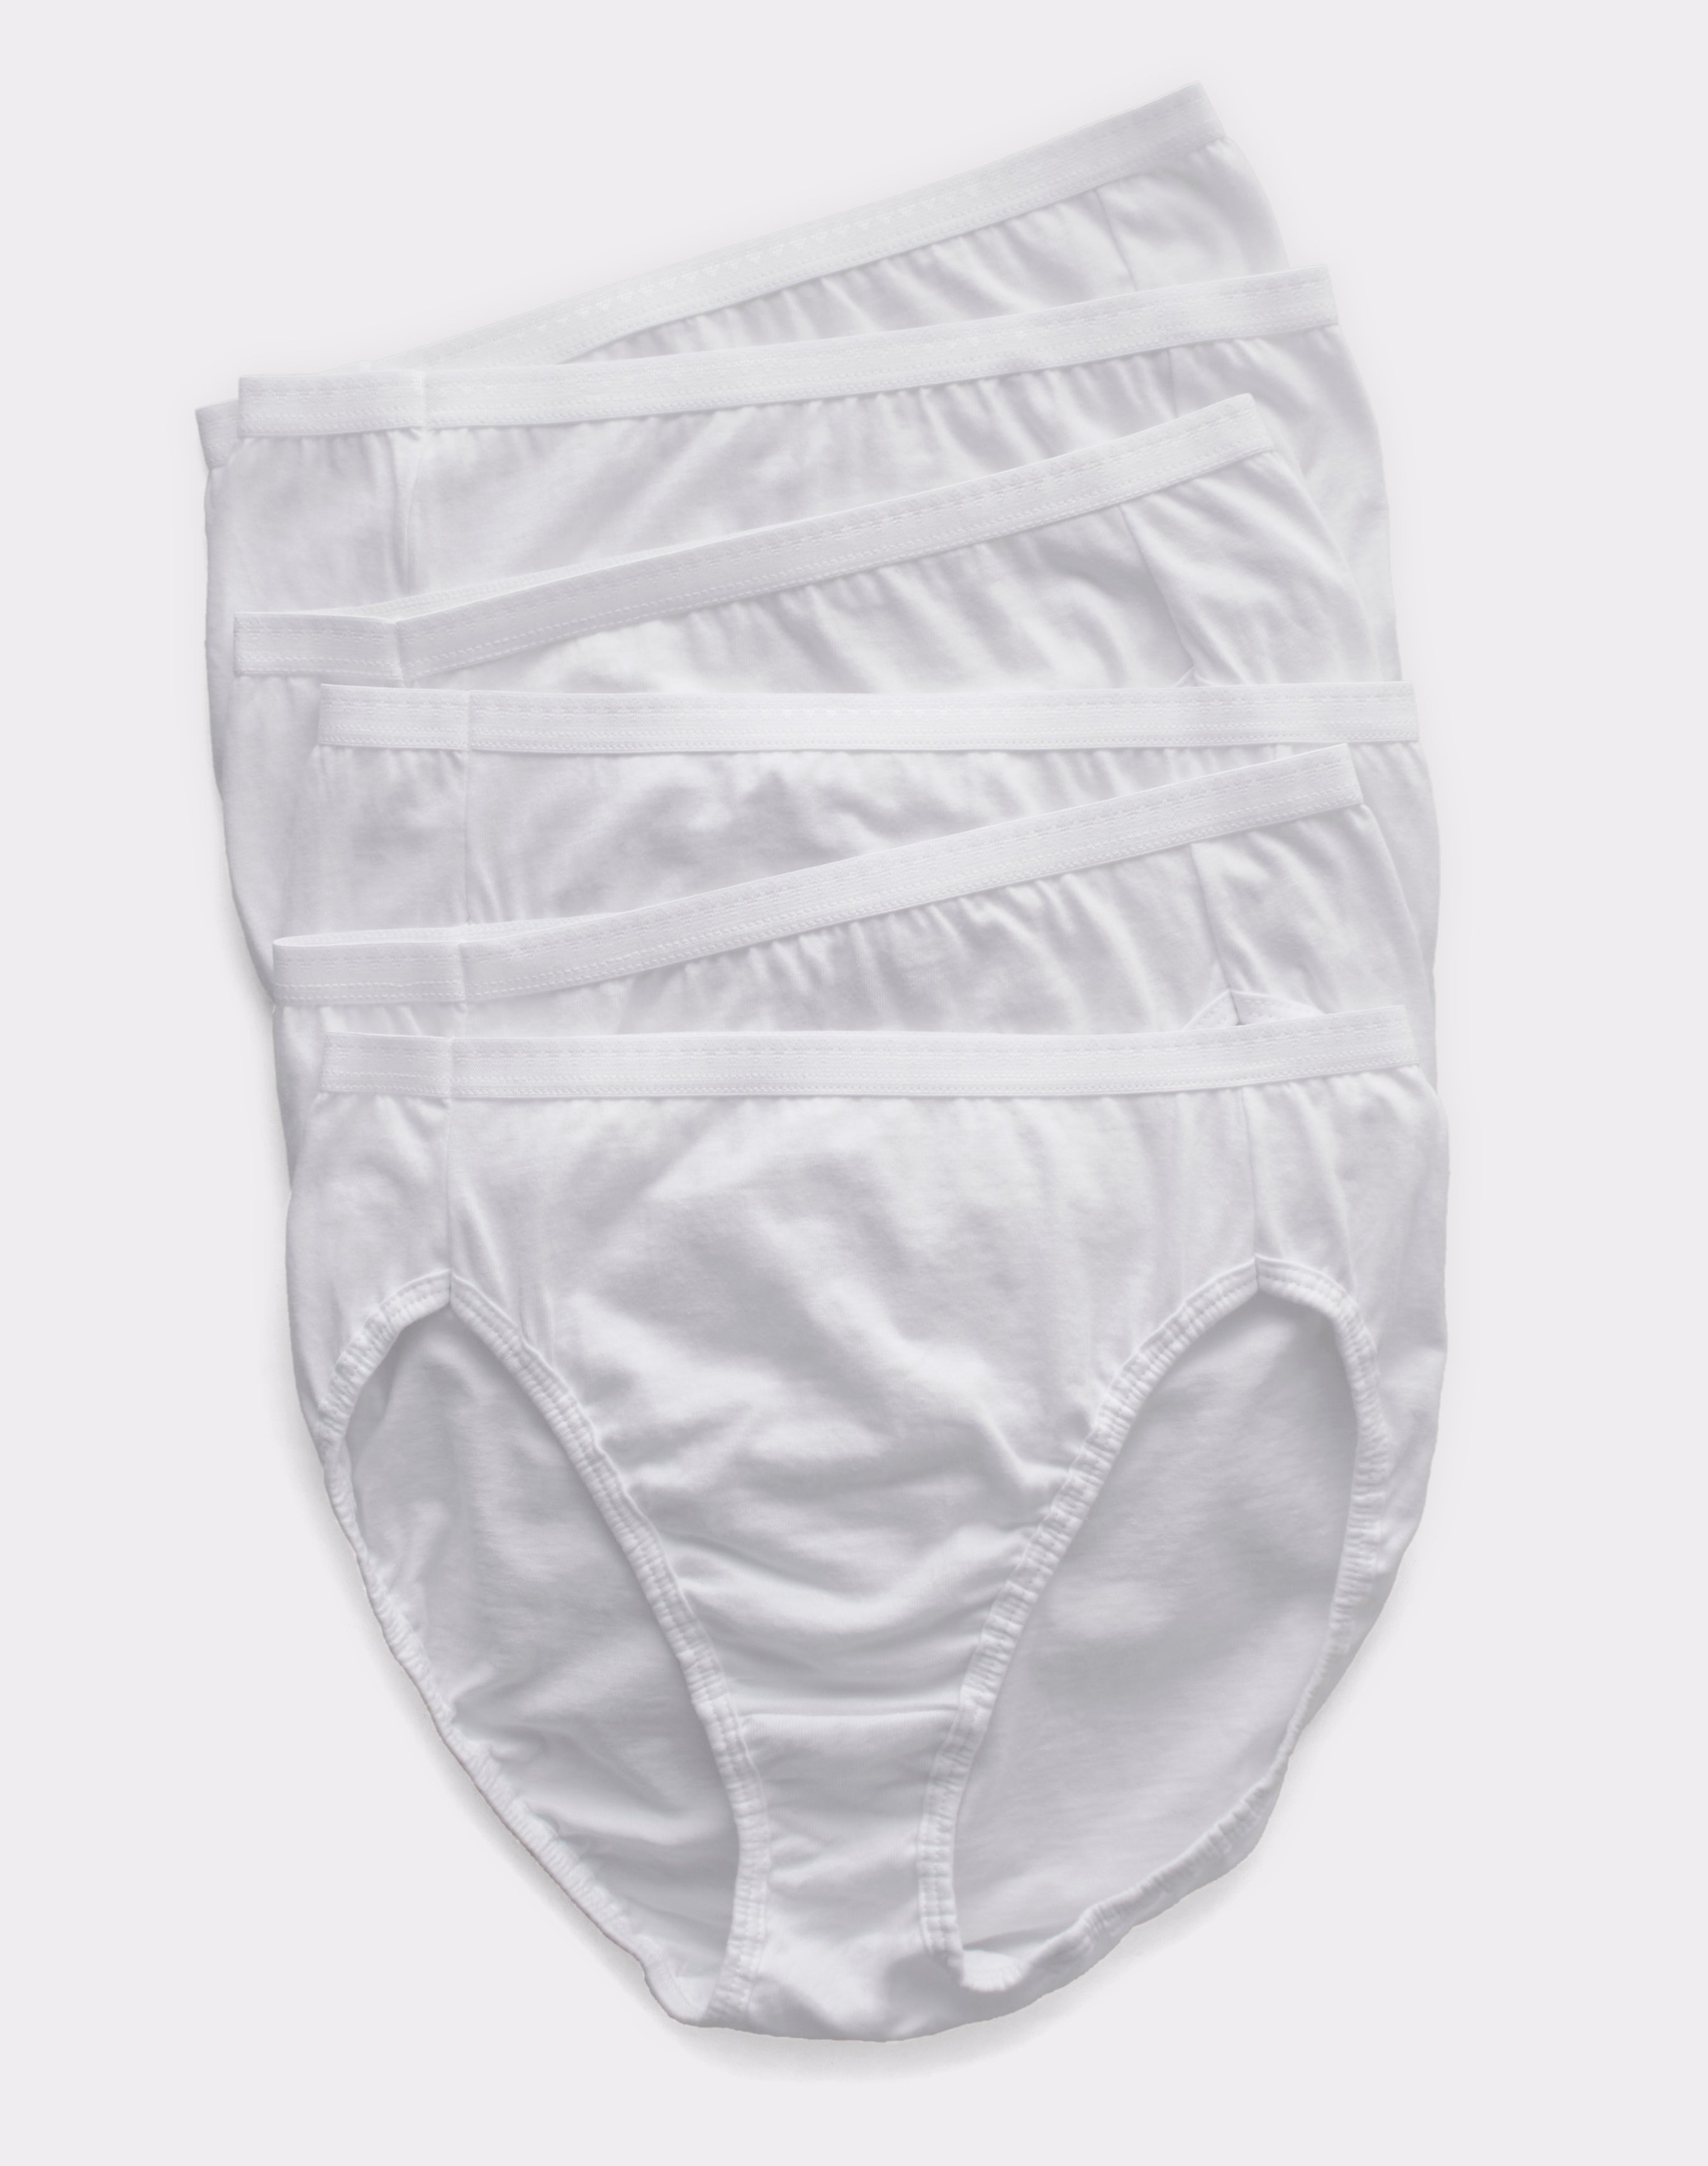 Buy Hanes Women's Ultimates Brief Panties White, 8 (Pack of 4) at